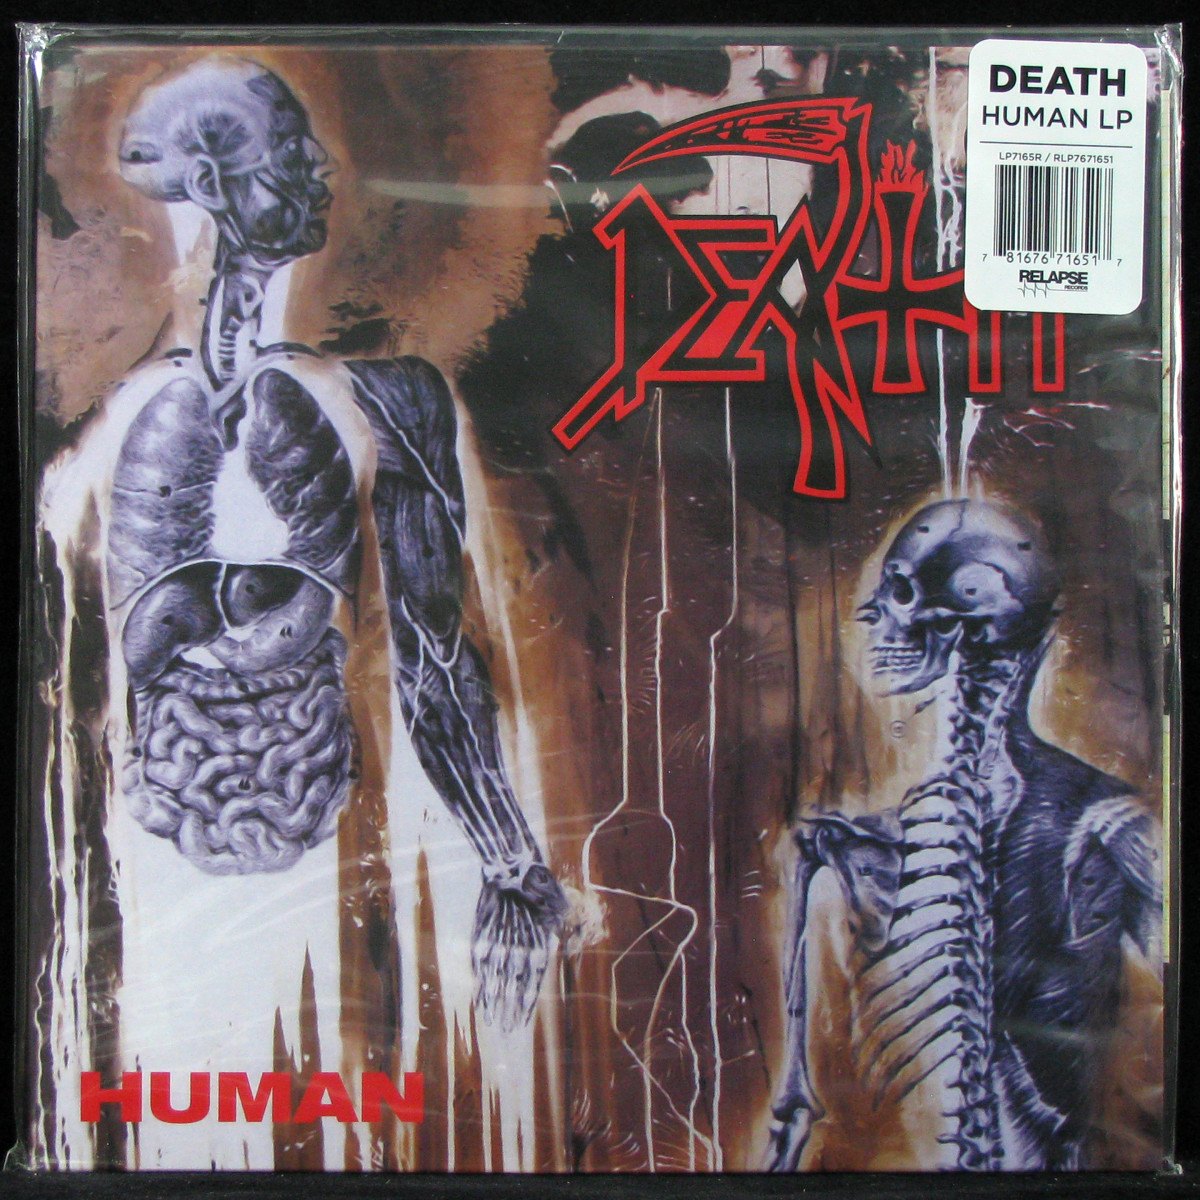 Human death. Death Human плакат. Nitepunk - Human LP. Размер обложки винилового диска LP.